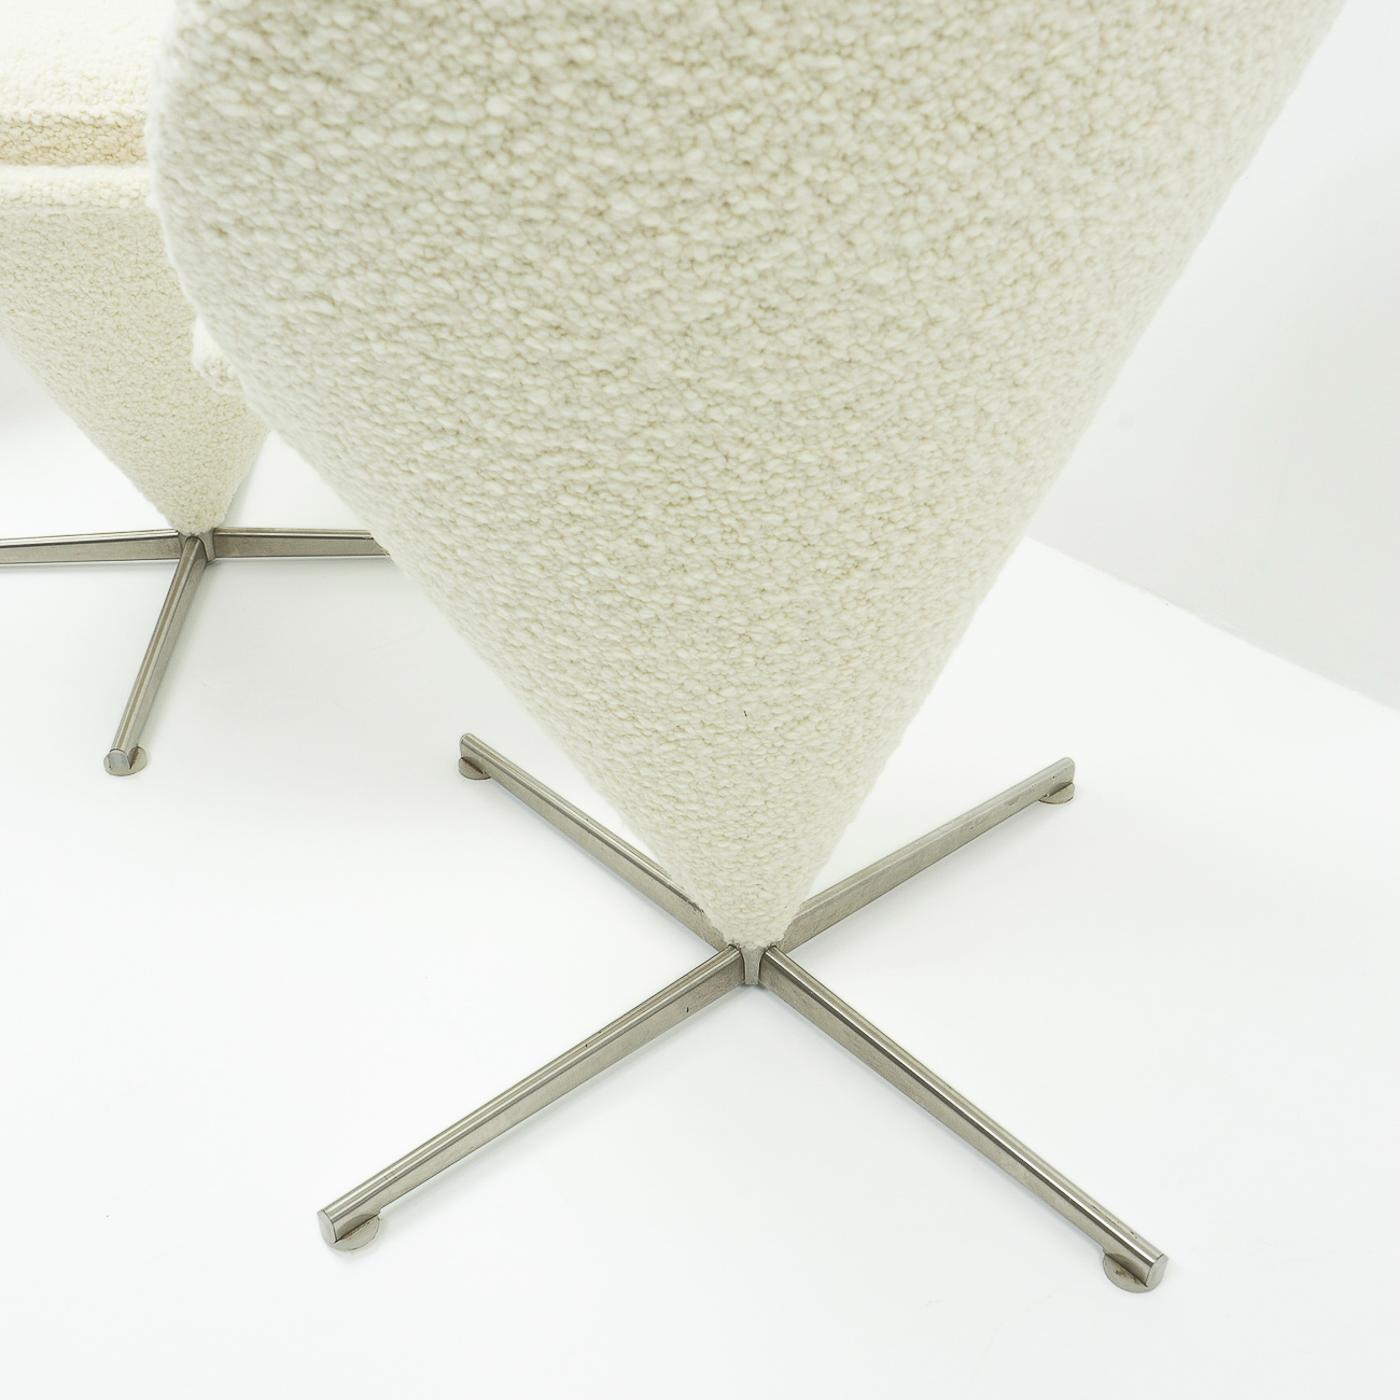 Design Classic Verner Panton Cone Chairs, Vitra, 2000er Jahre (Metall) im Angebot